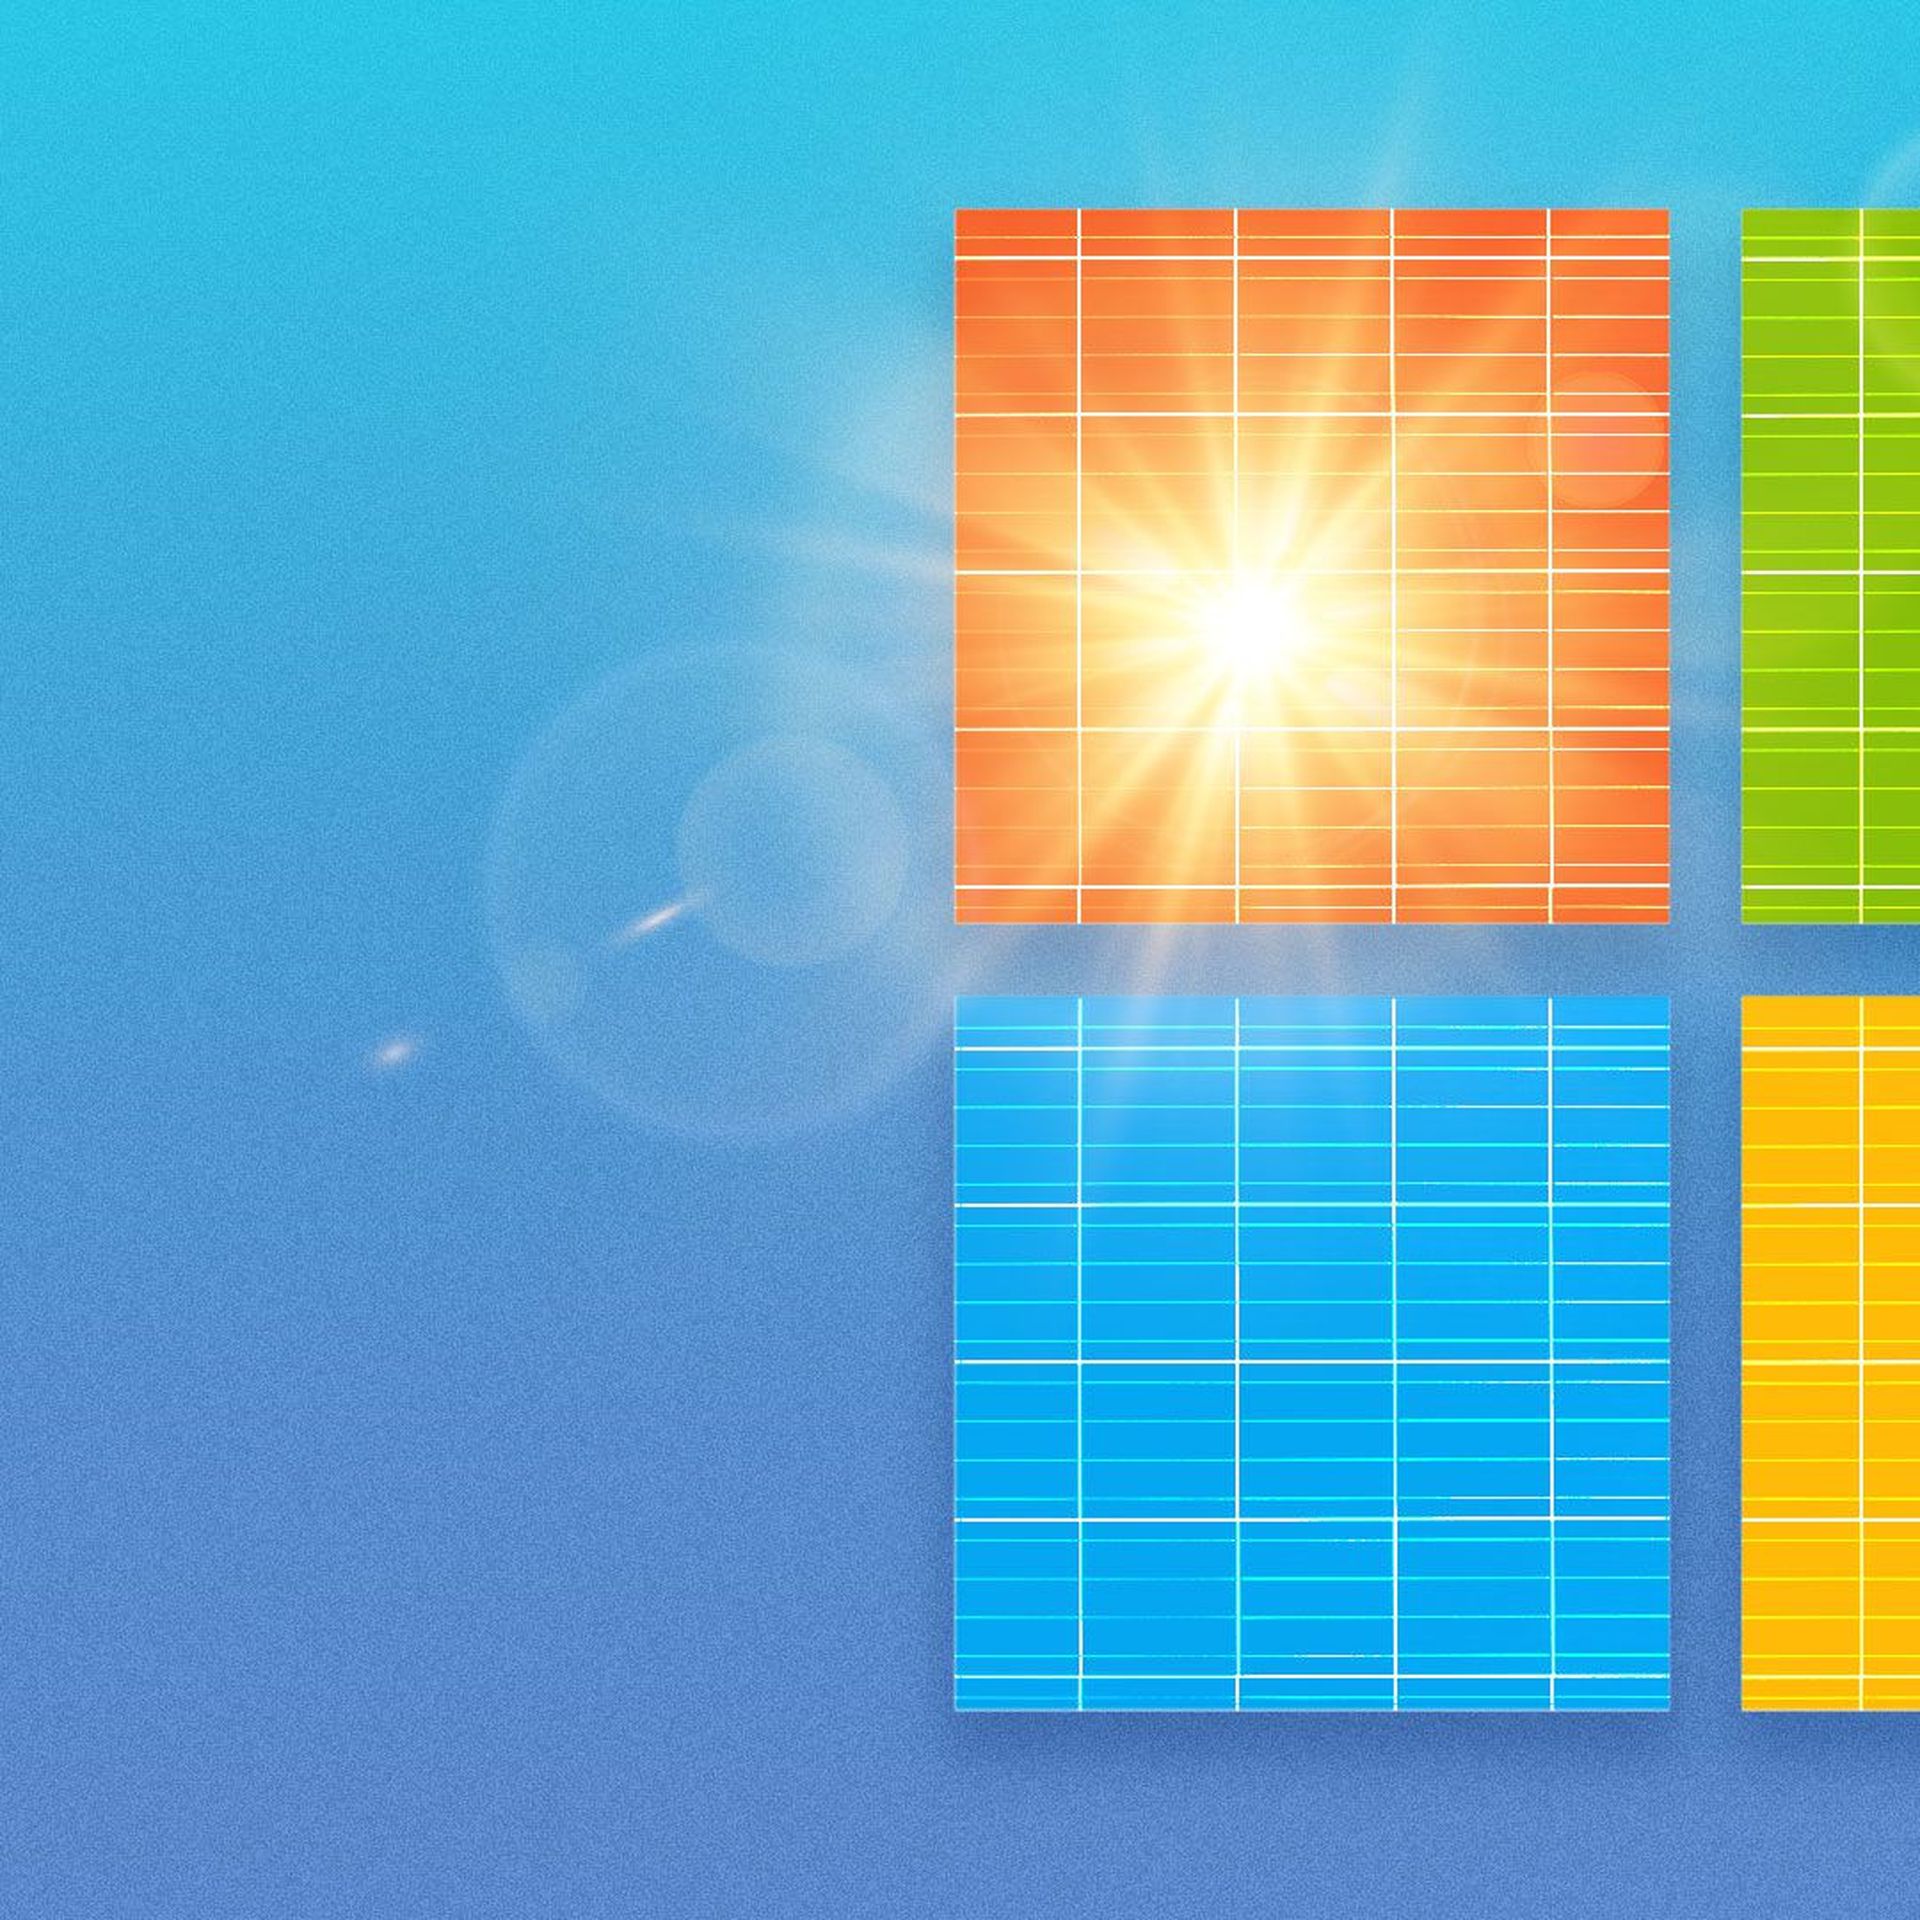 Illustration of solar panels in the shape of the Microsoft logo.